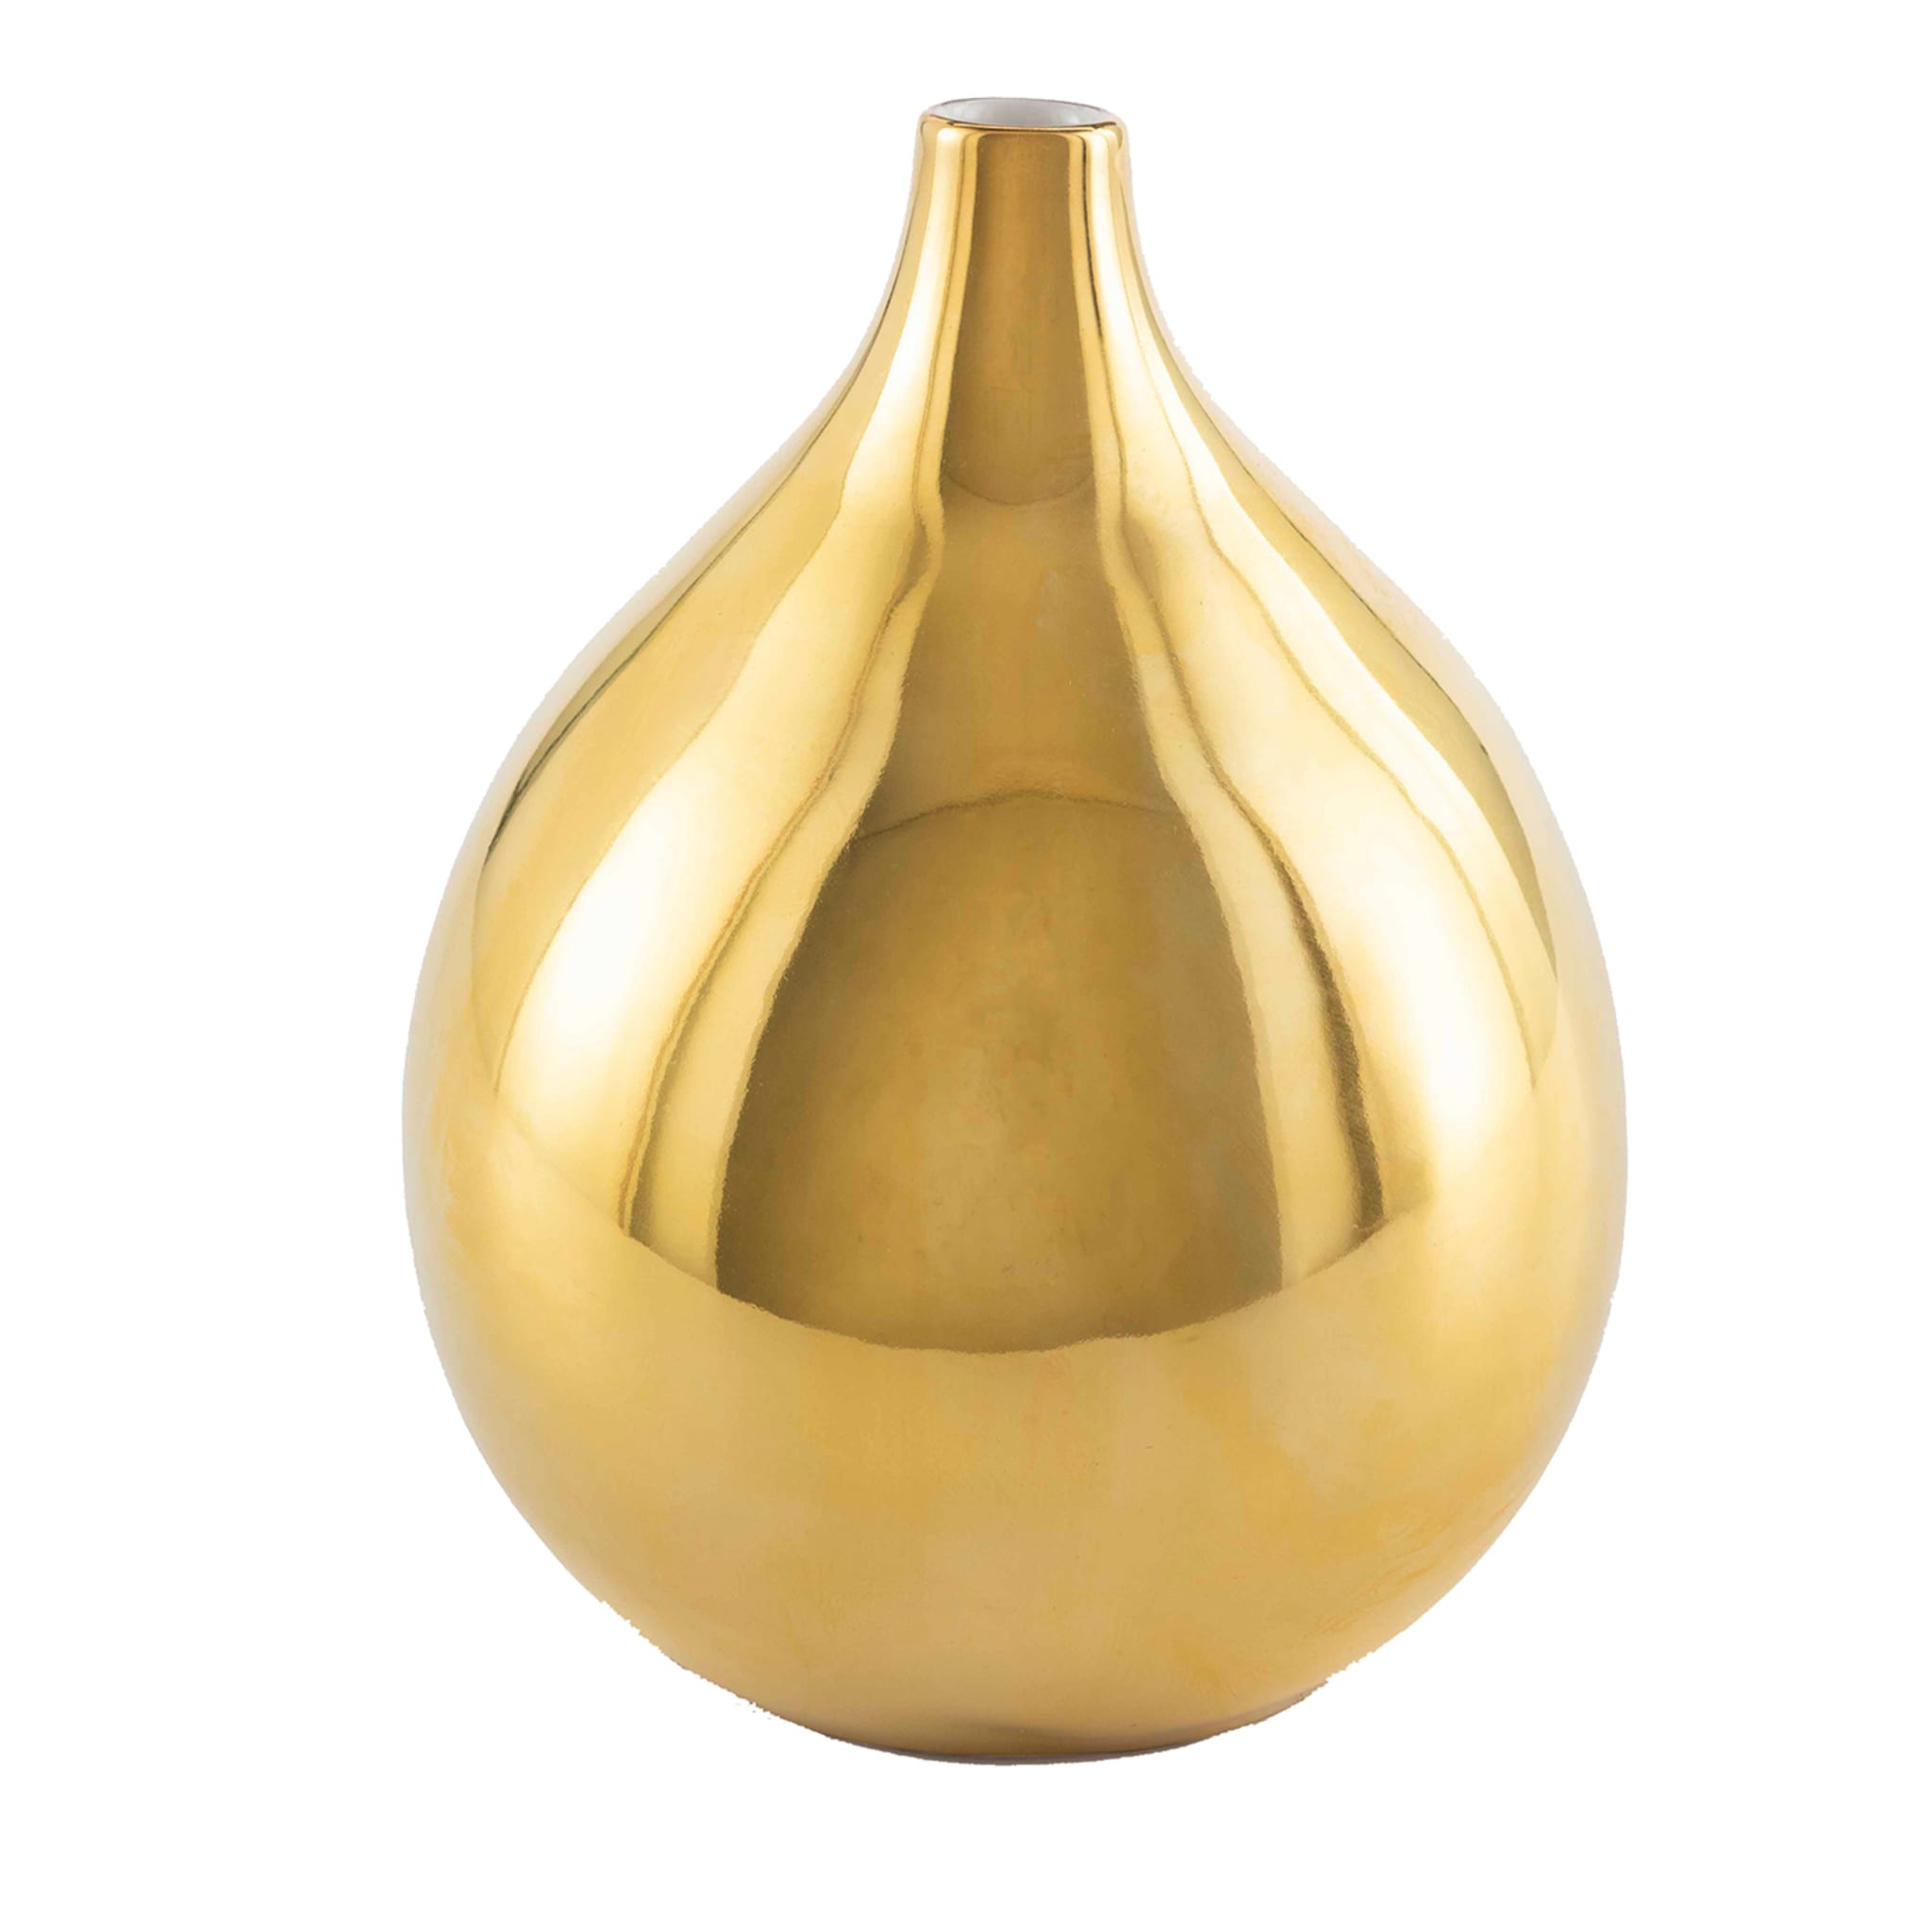 Punch Gold Vase  - Alternative view 1